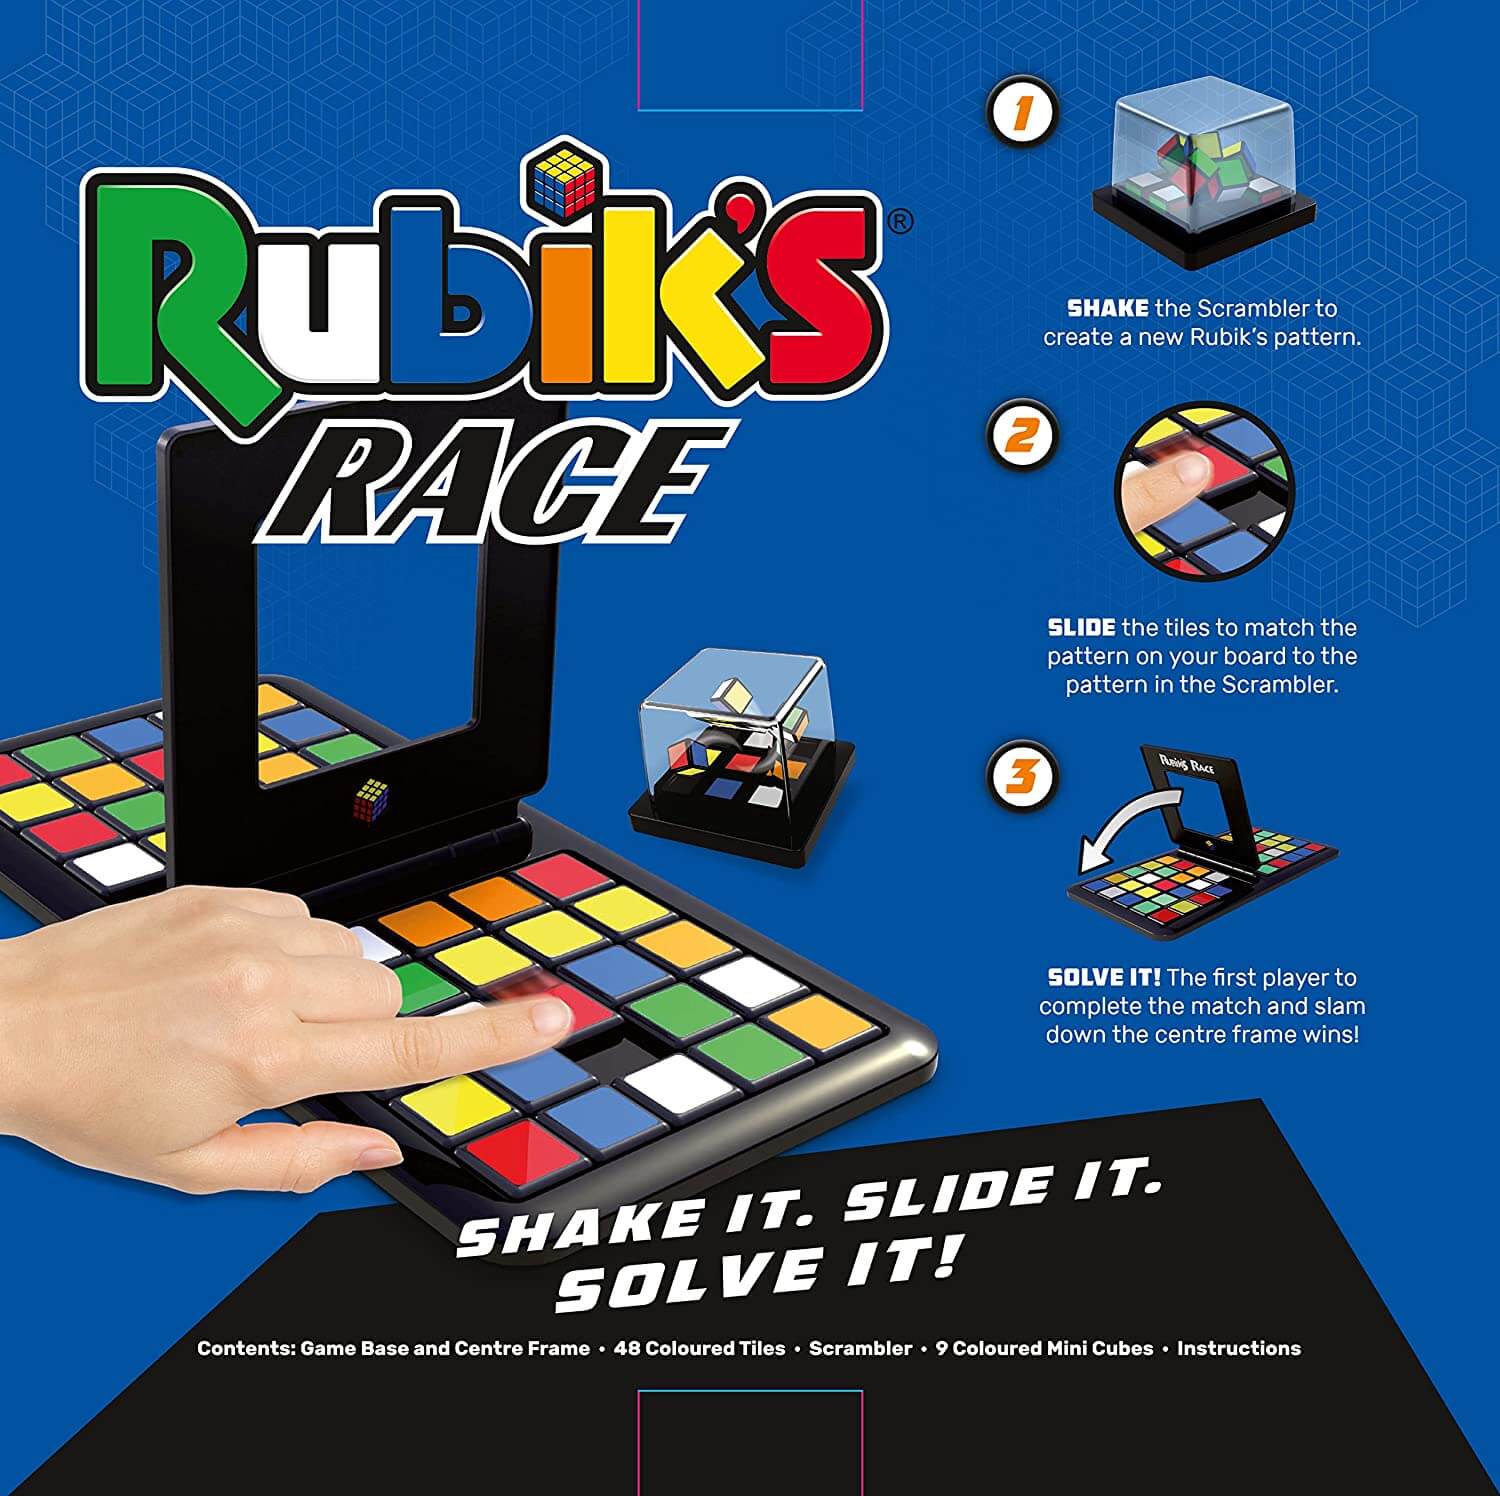 Rubik's Race 